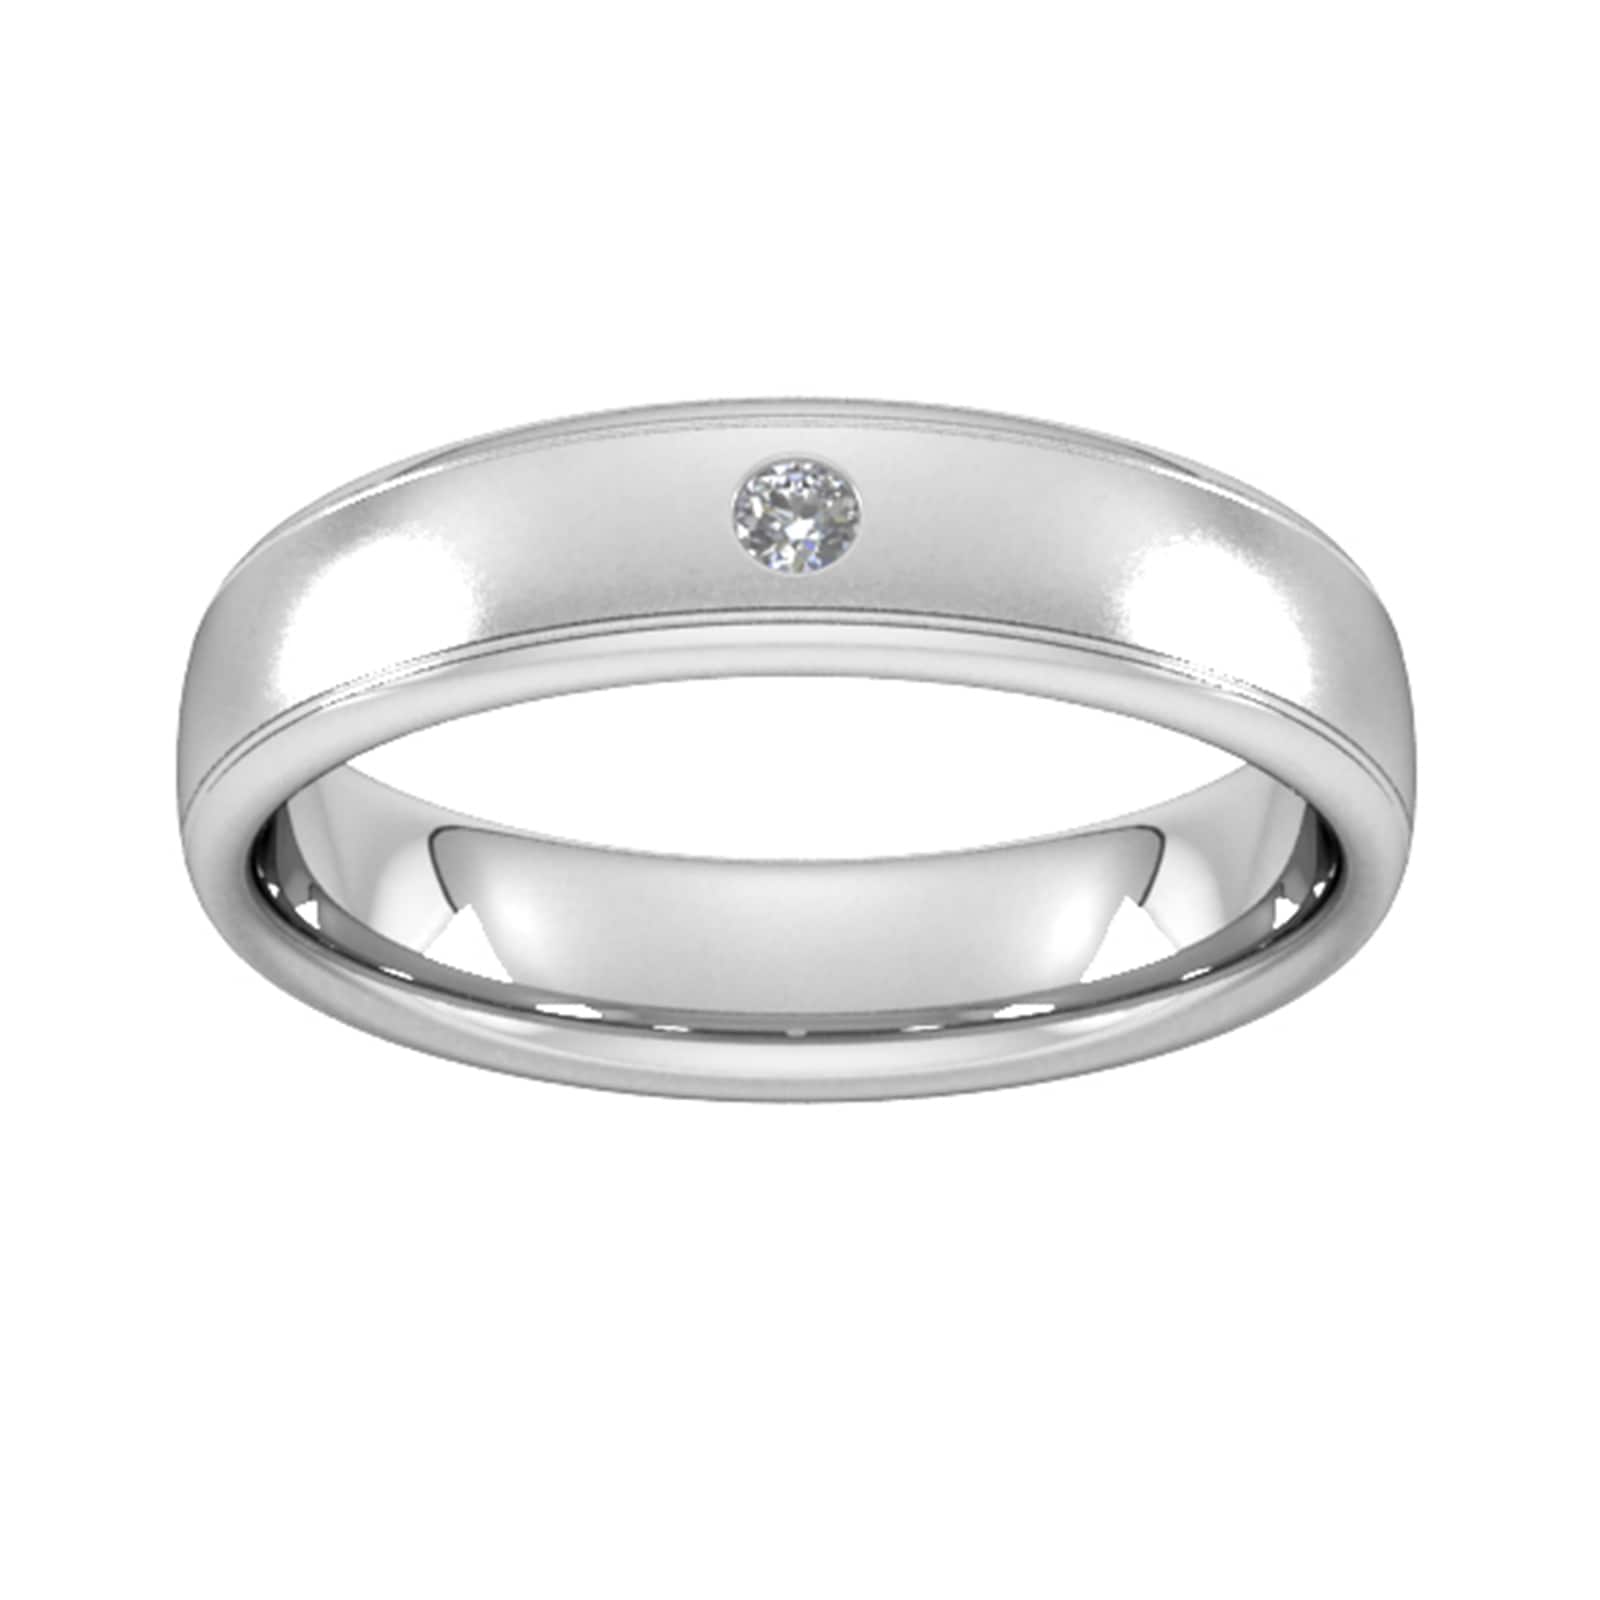 5mm Brilliant Cut Diamond Set Wedding Ring In 9 Carat White Gold - Ring Size T